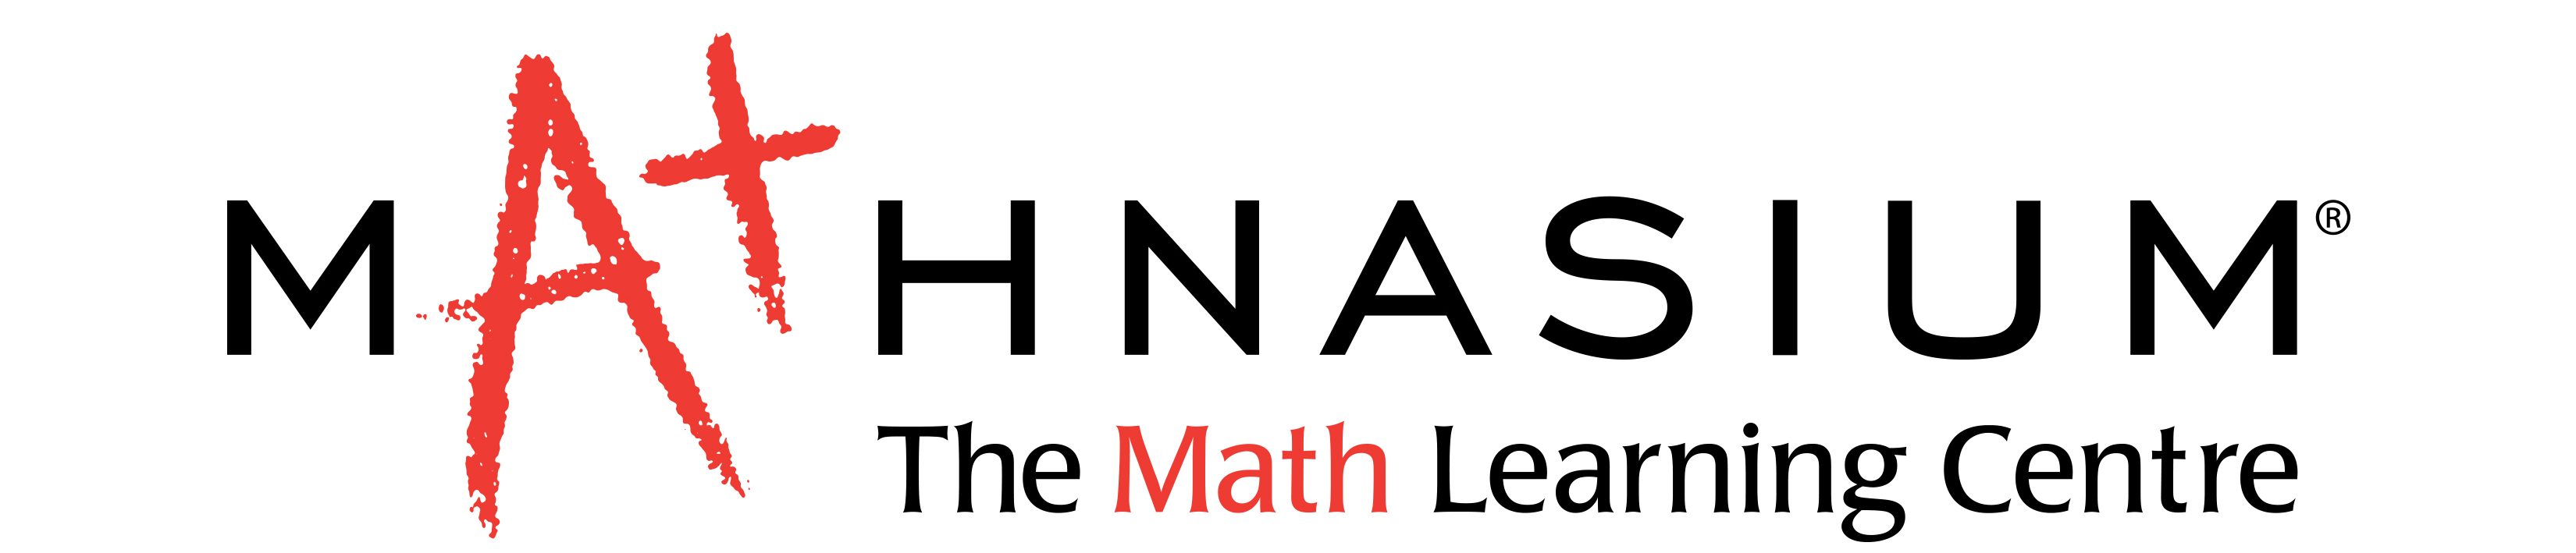 Mathnasium The Math Learning Centre